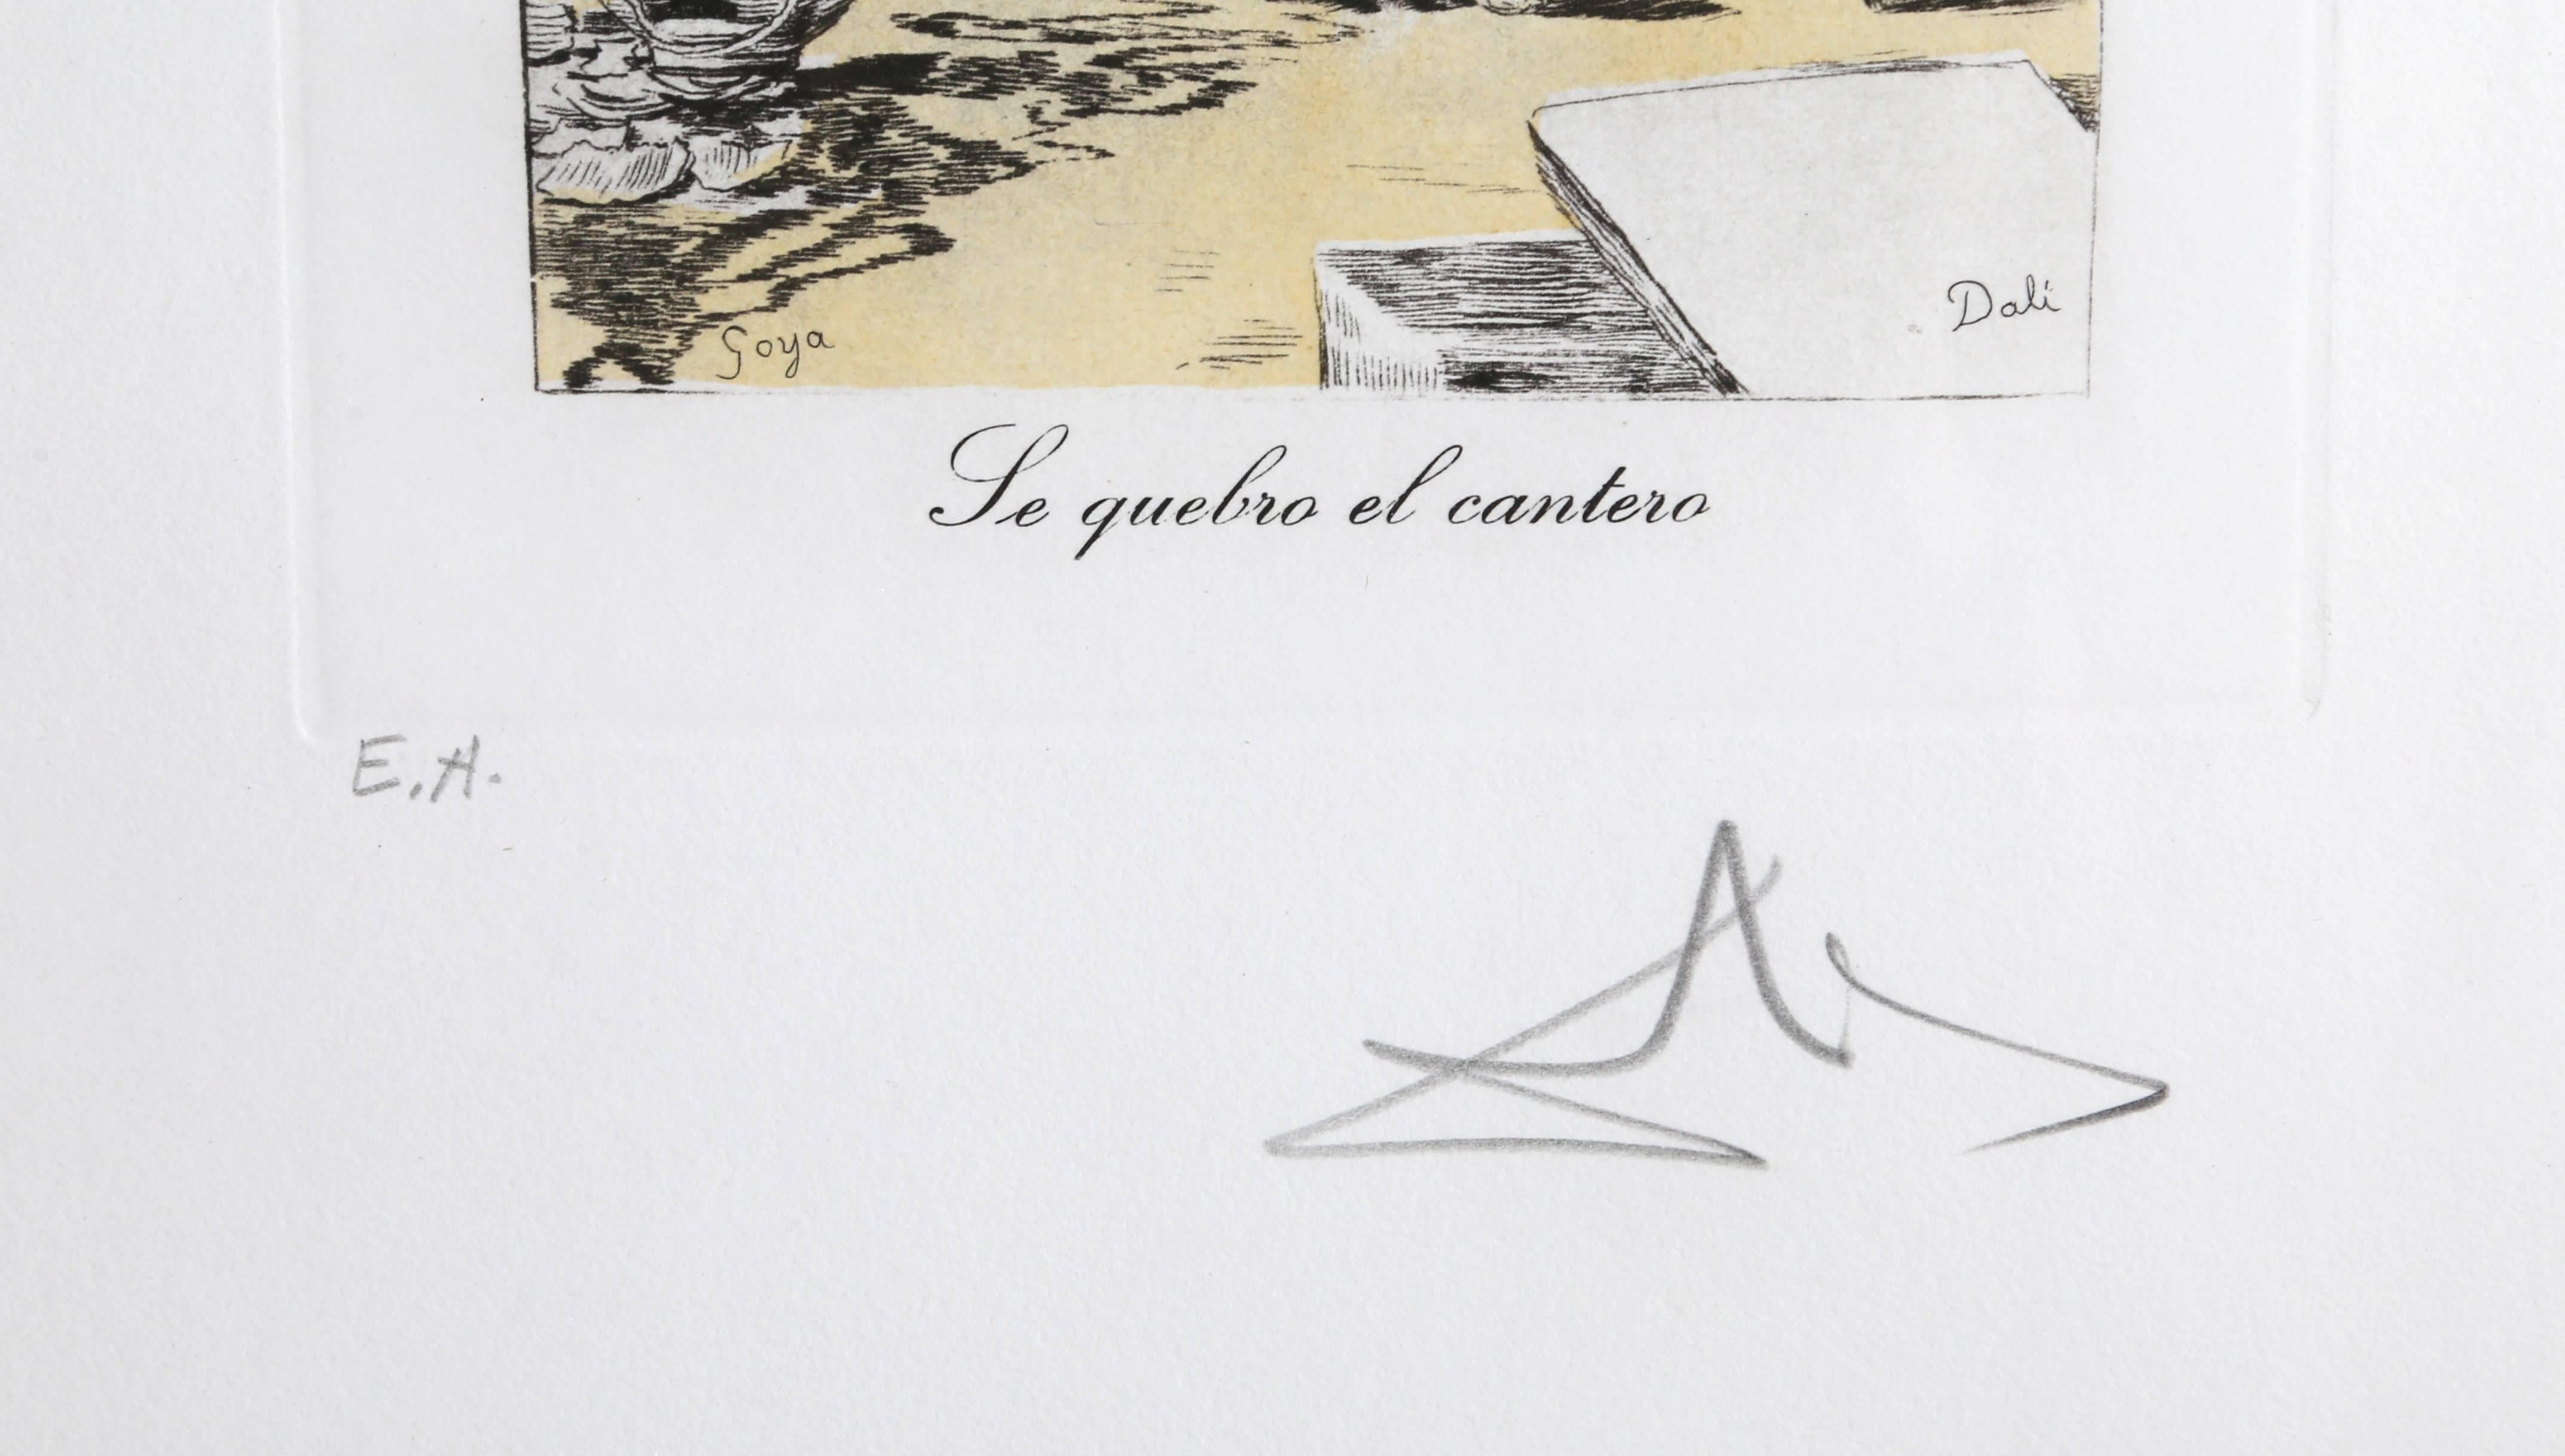 Le Quebro el Cantero from Les Caprices de Goya - Print by Salvador Dalí